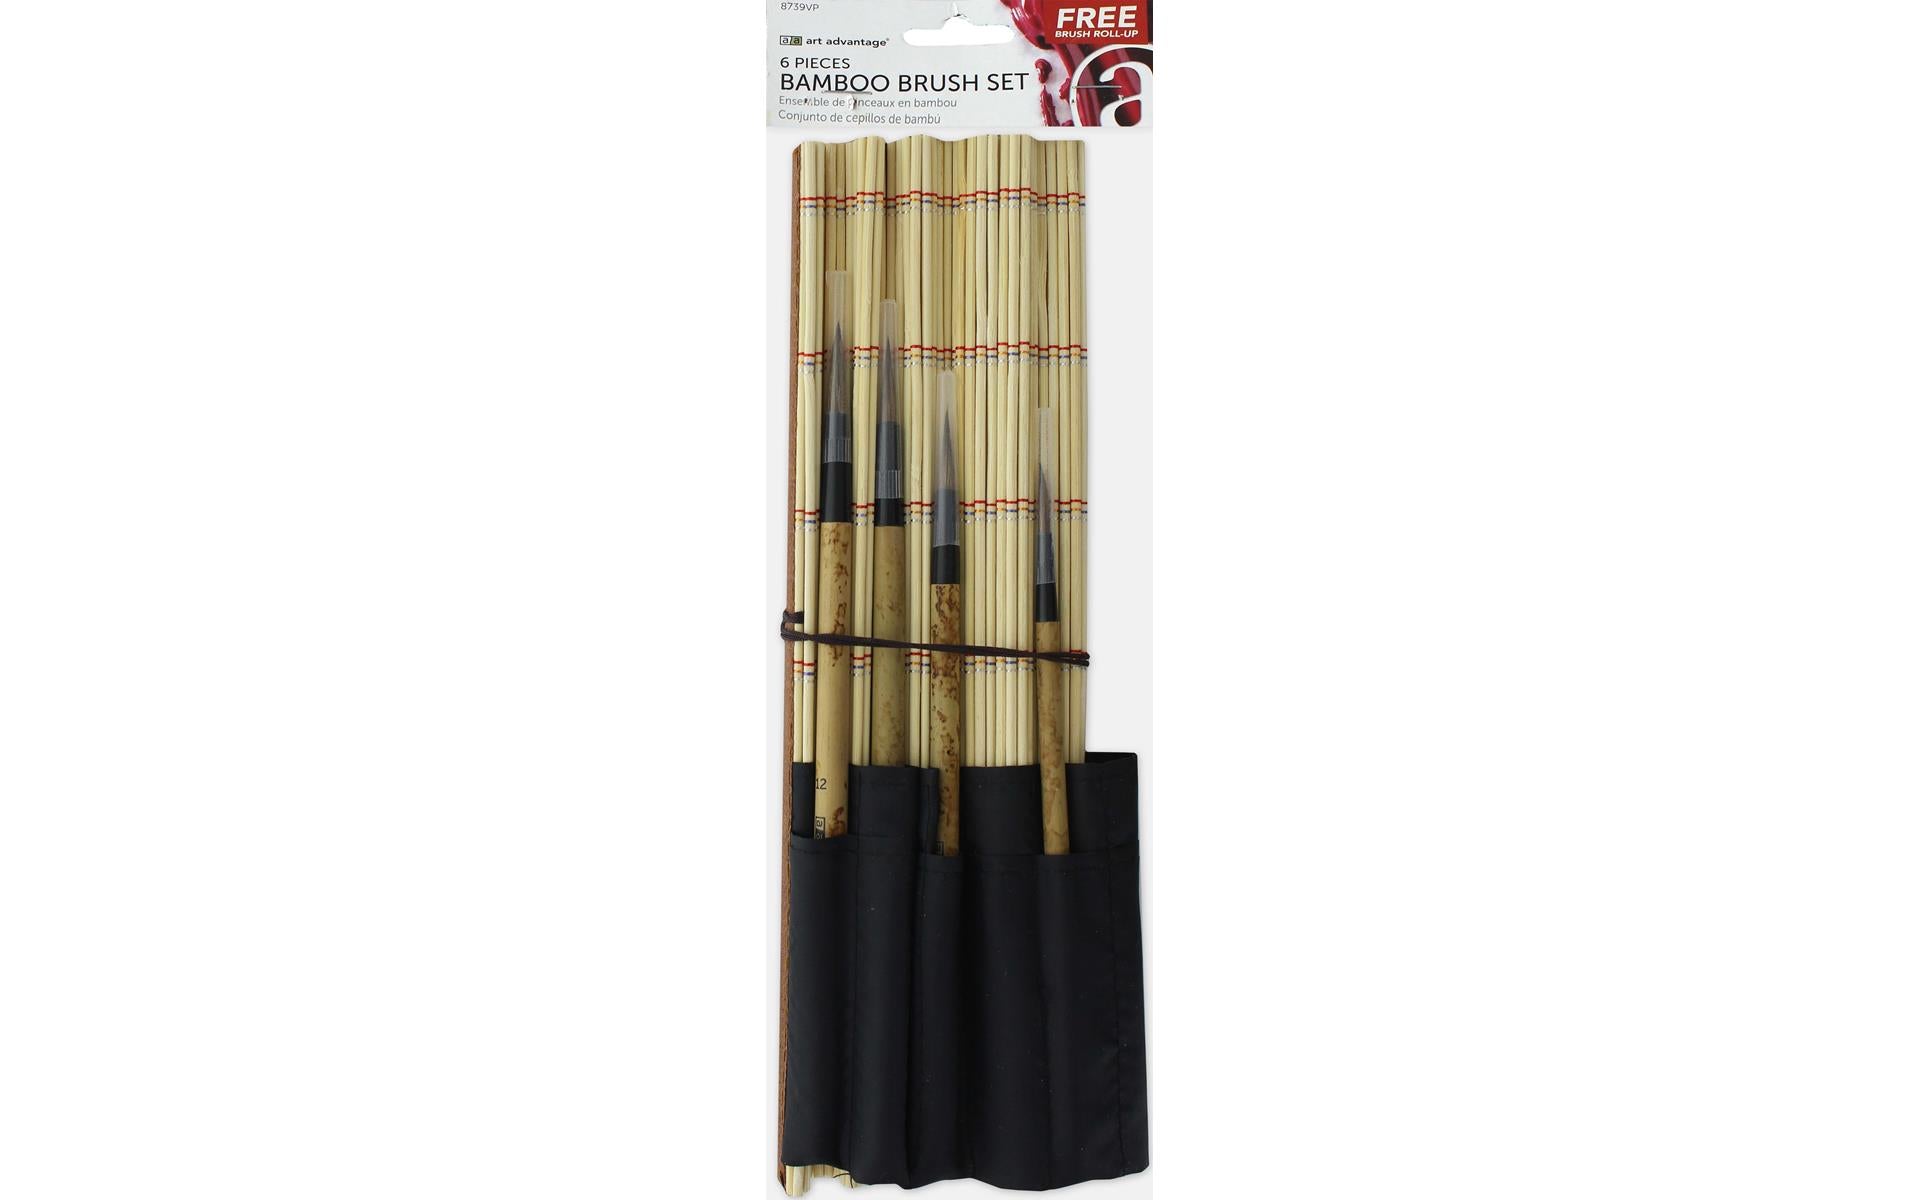 Art Advantage Bamboo Brush Set Value Pack